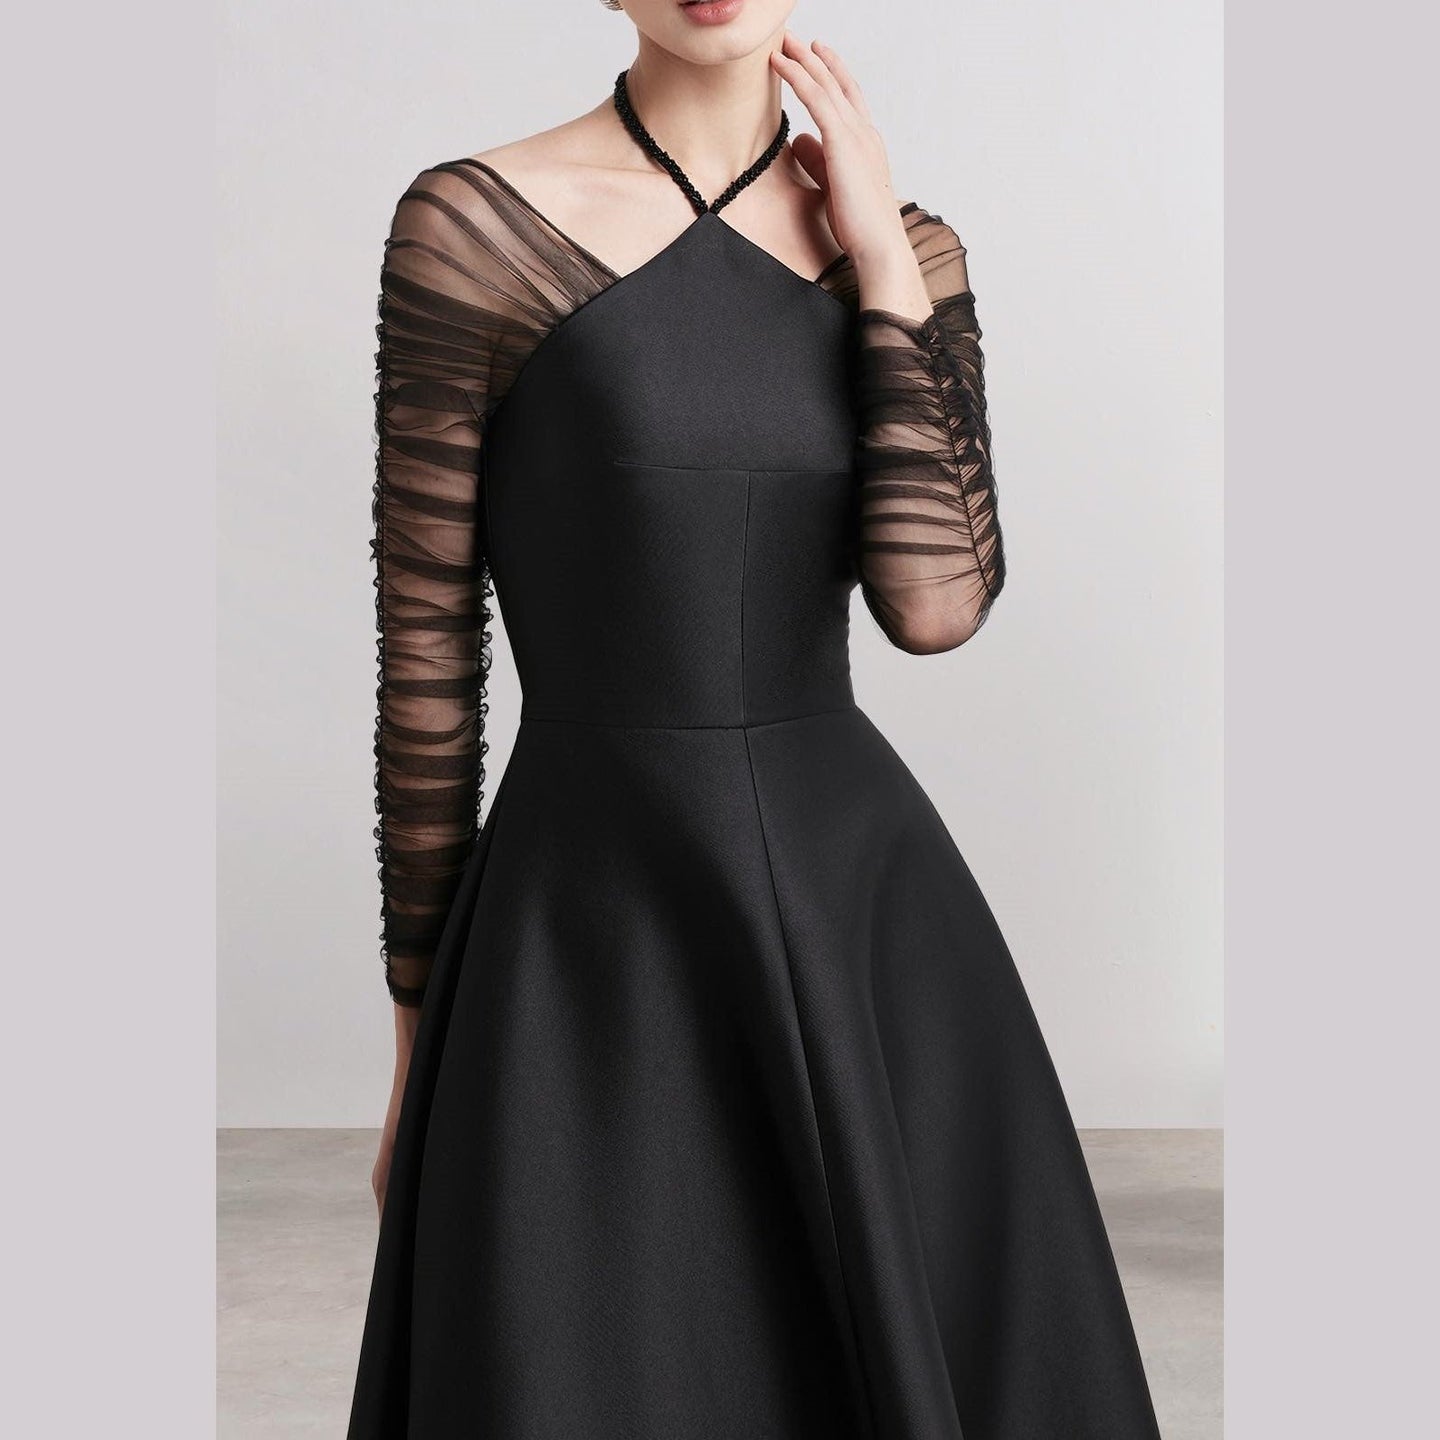 Halter Neck Dress black gown wedding guest dress, lace sheer mesh sleeve - Cielie 